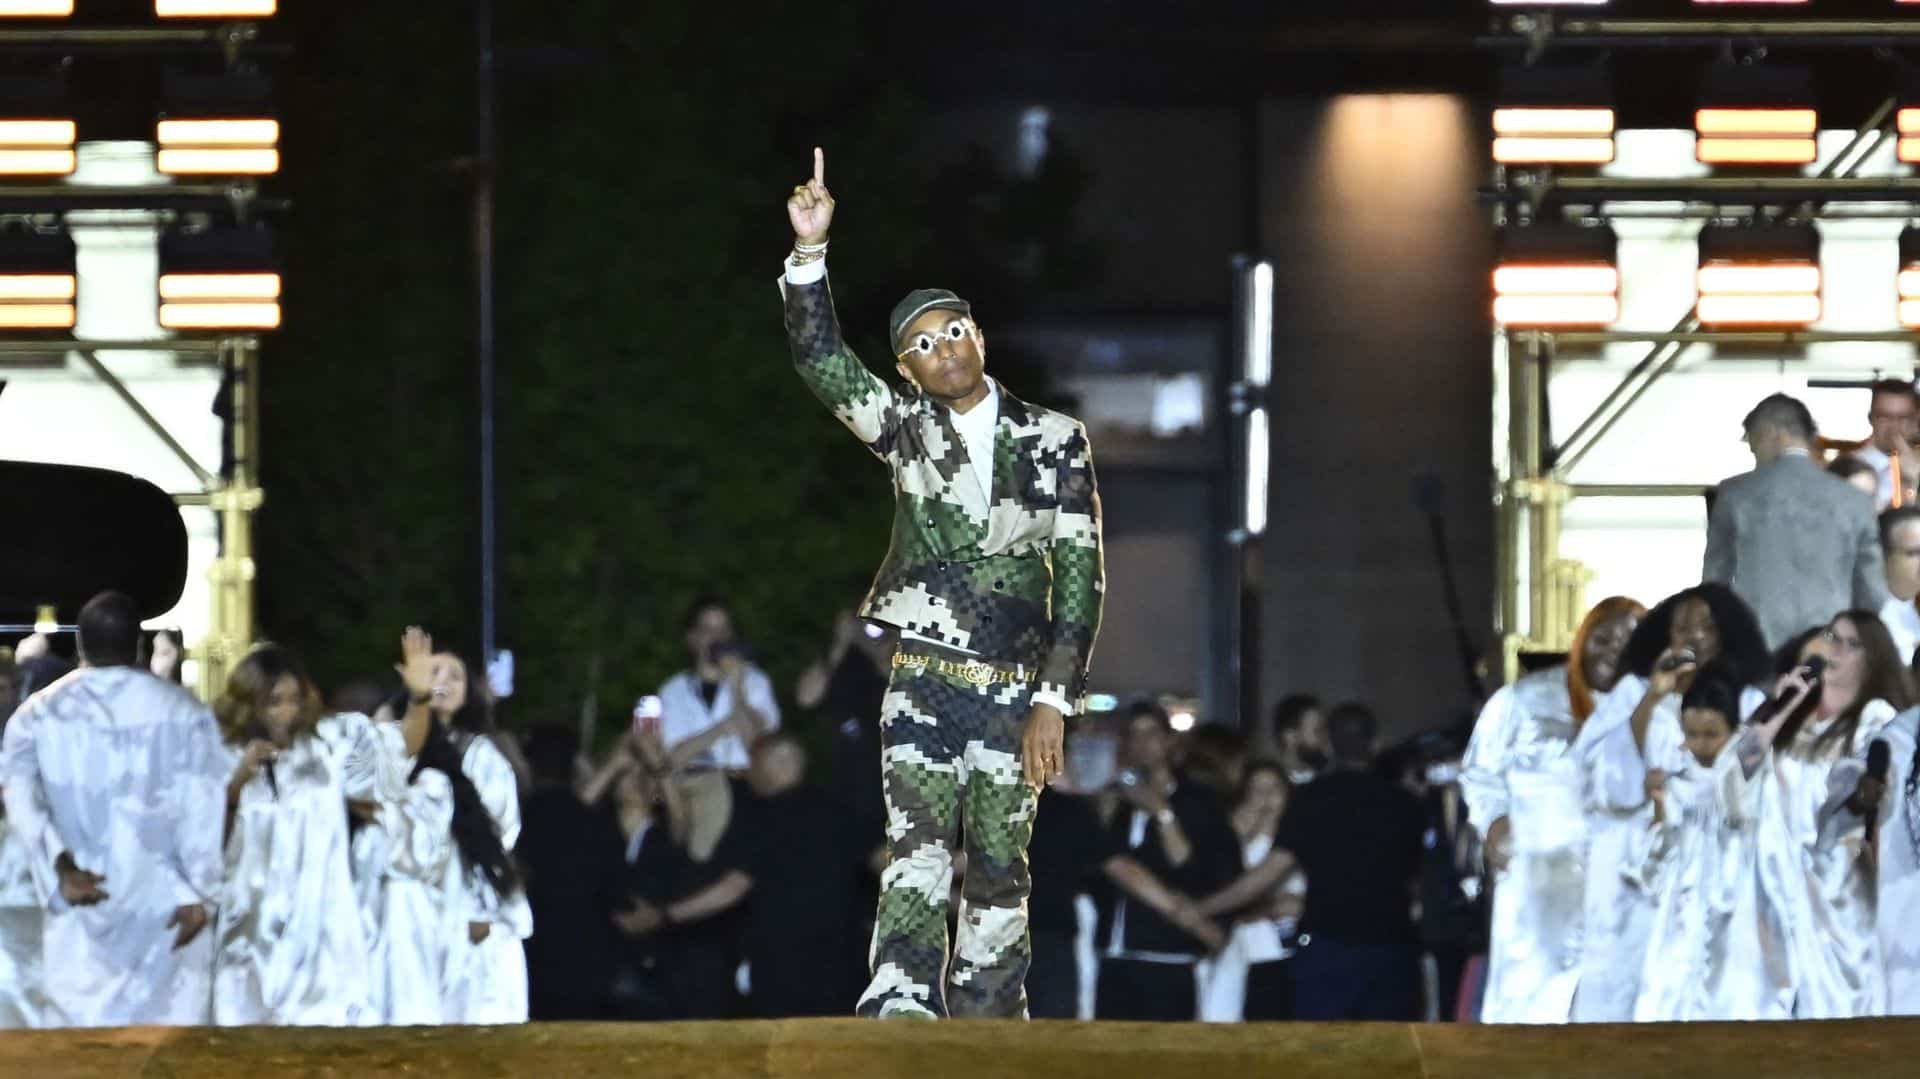 Paris Fashion Week looks to future with Pharrell Williams debut